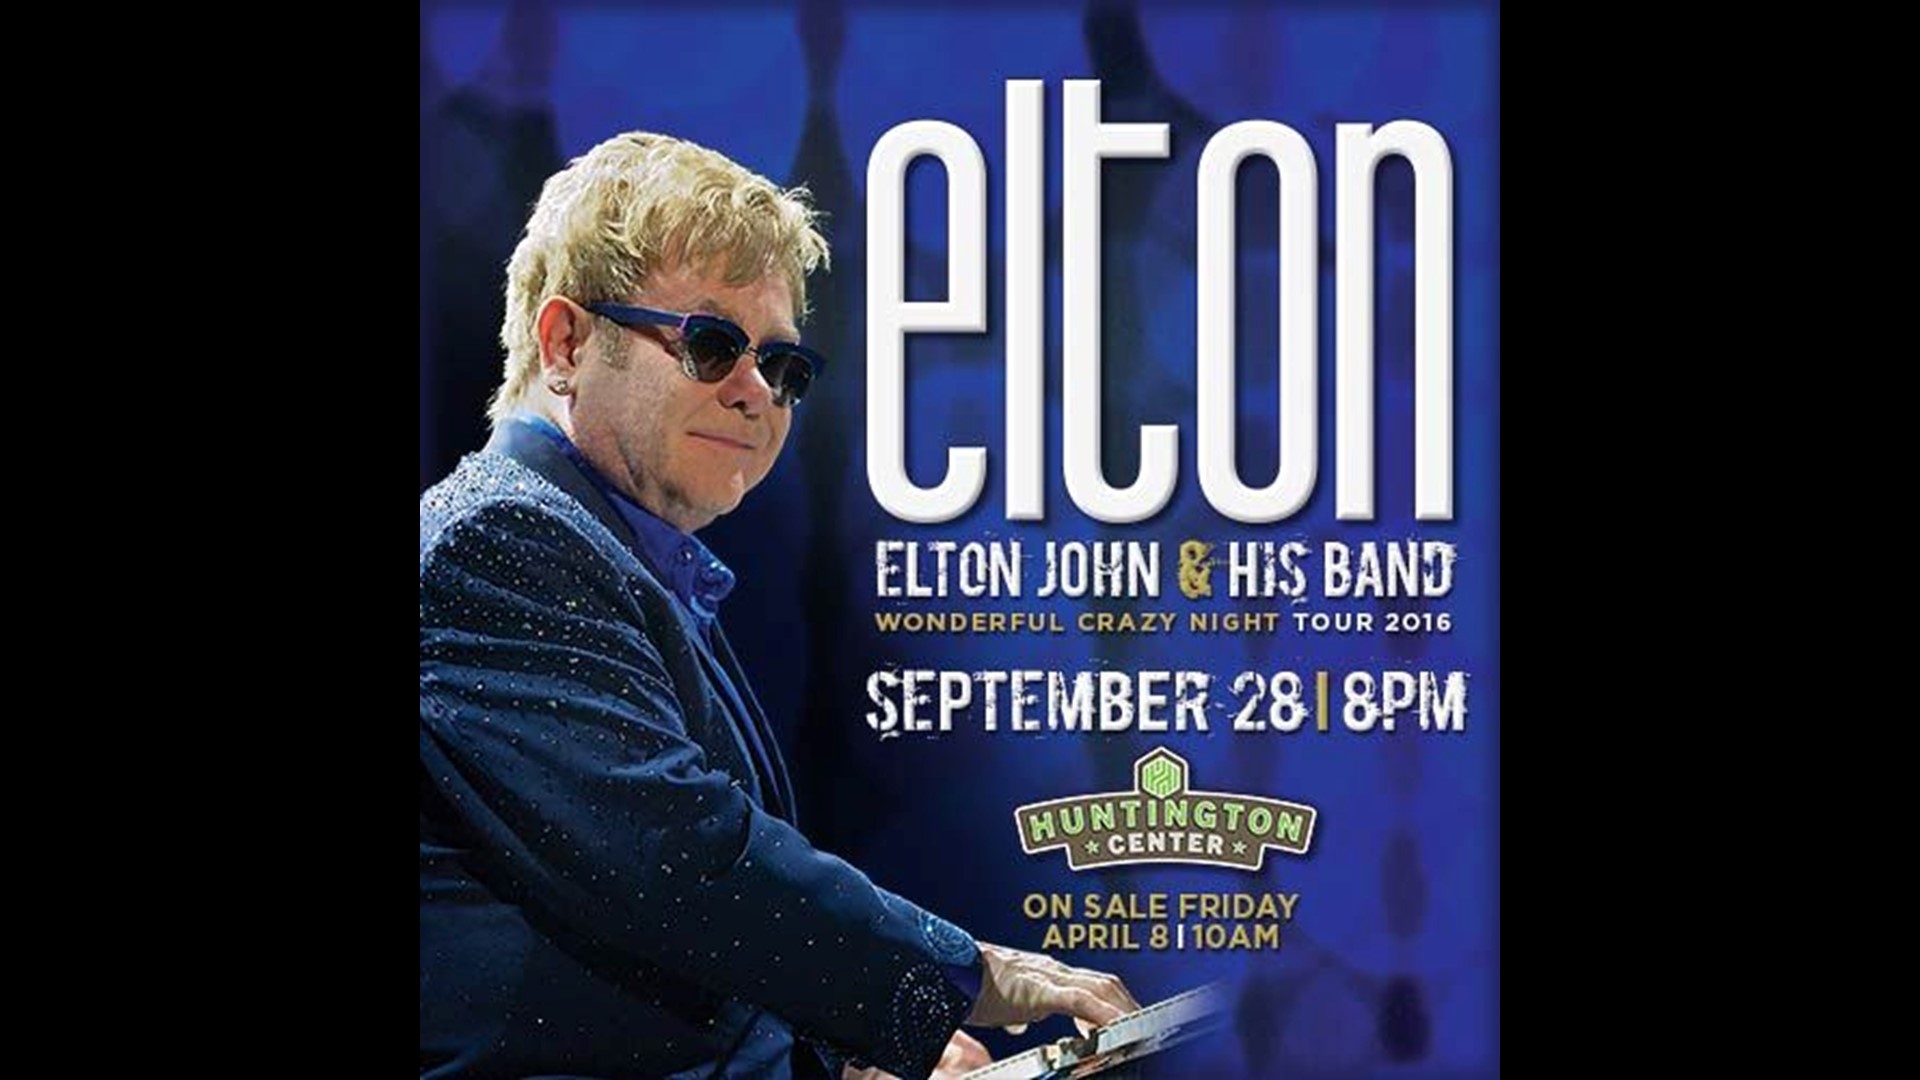 Tickets go on sale for Elton John's Toledo concert